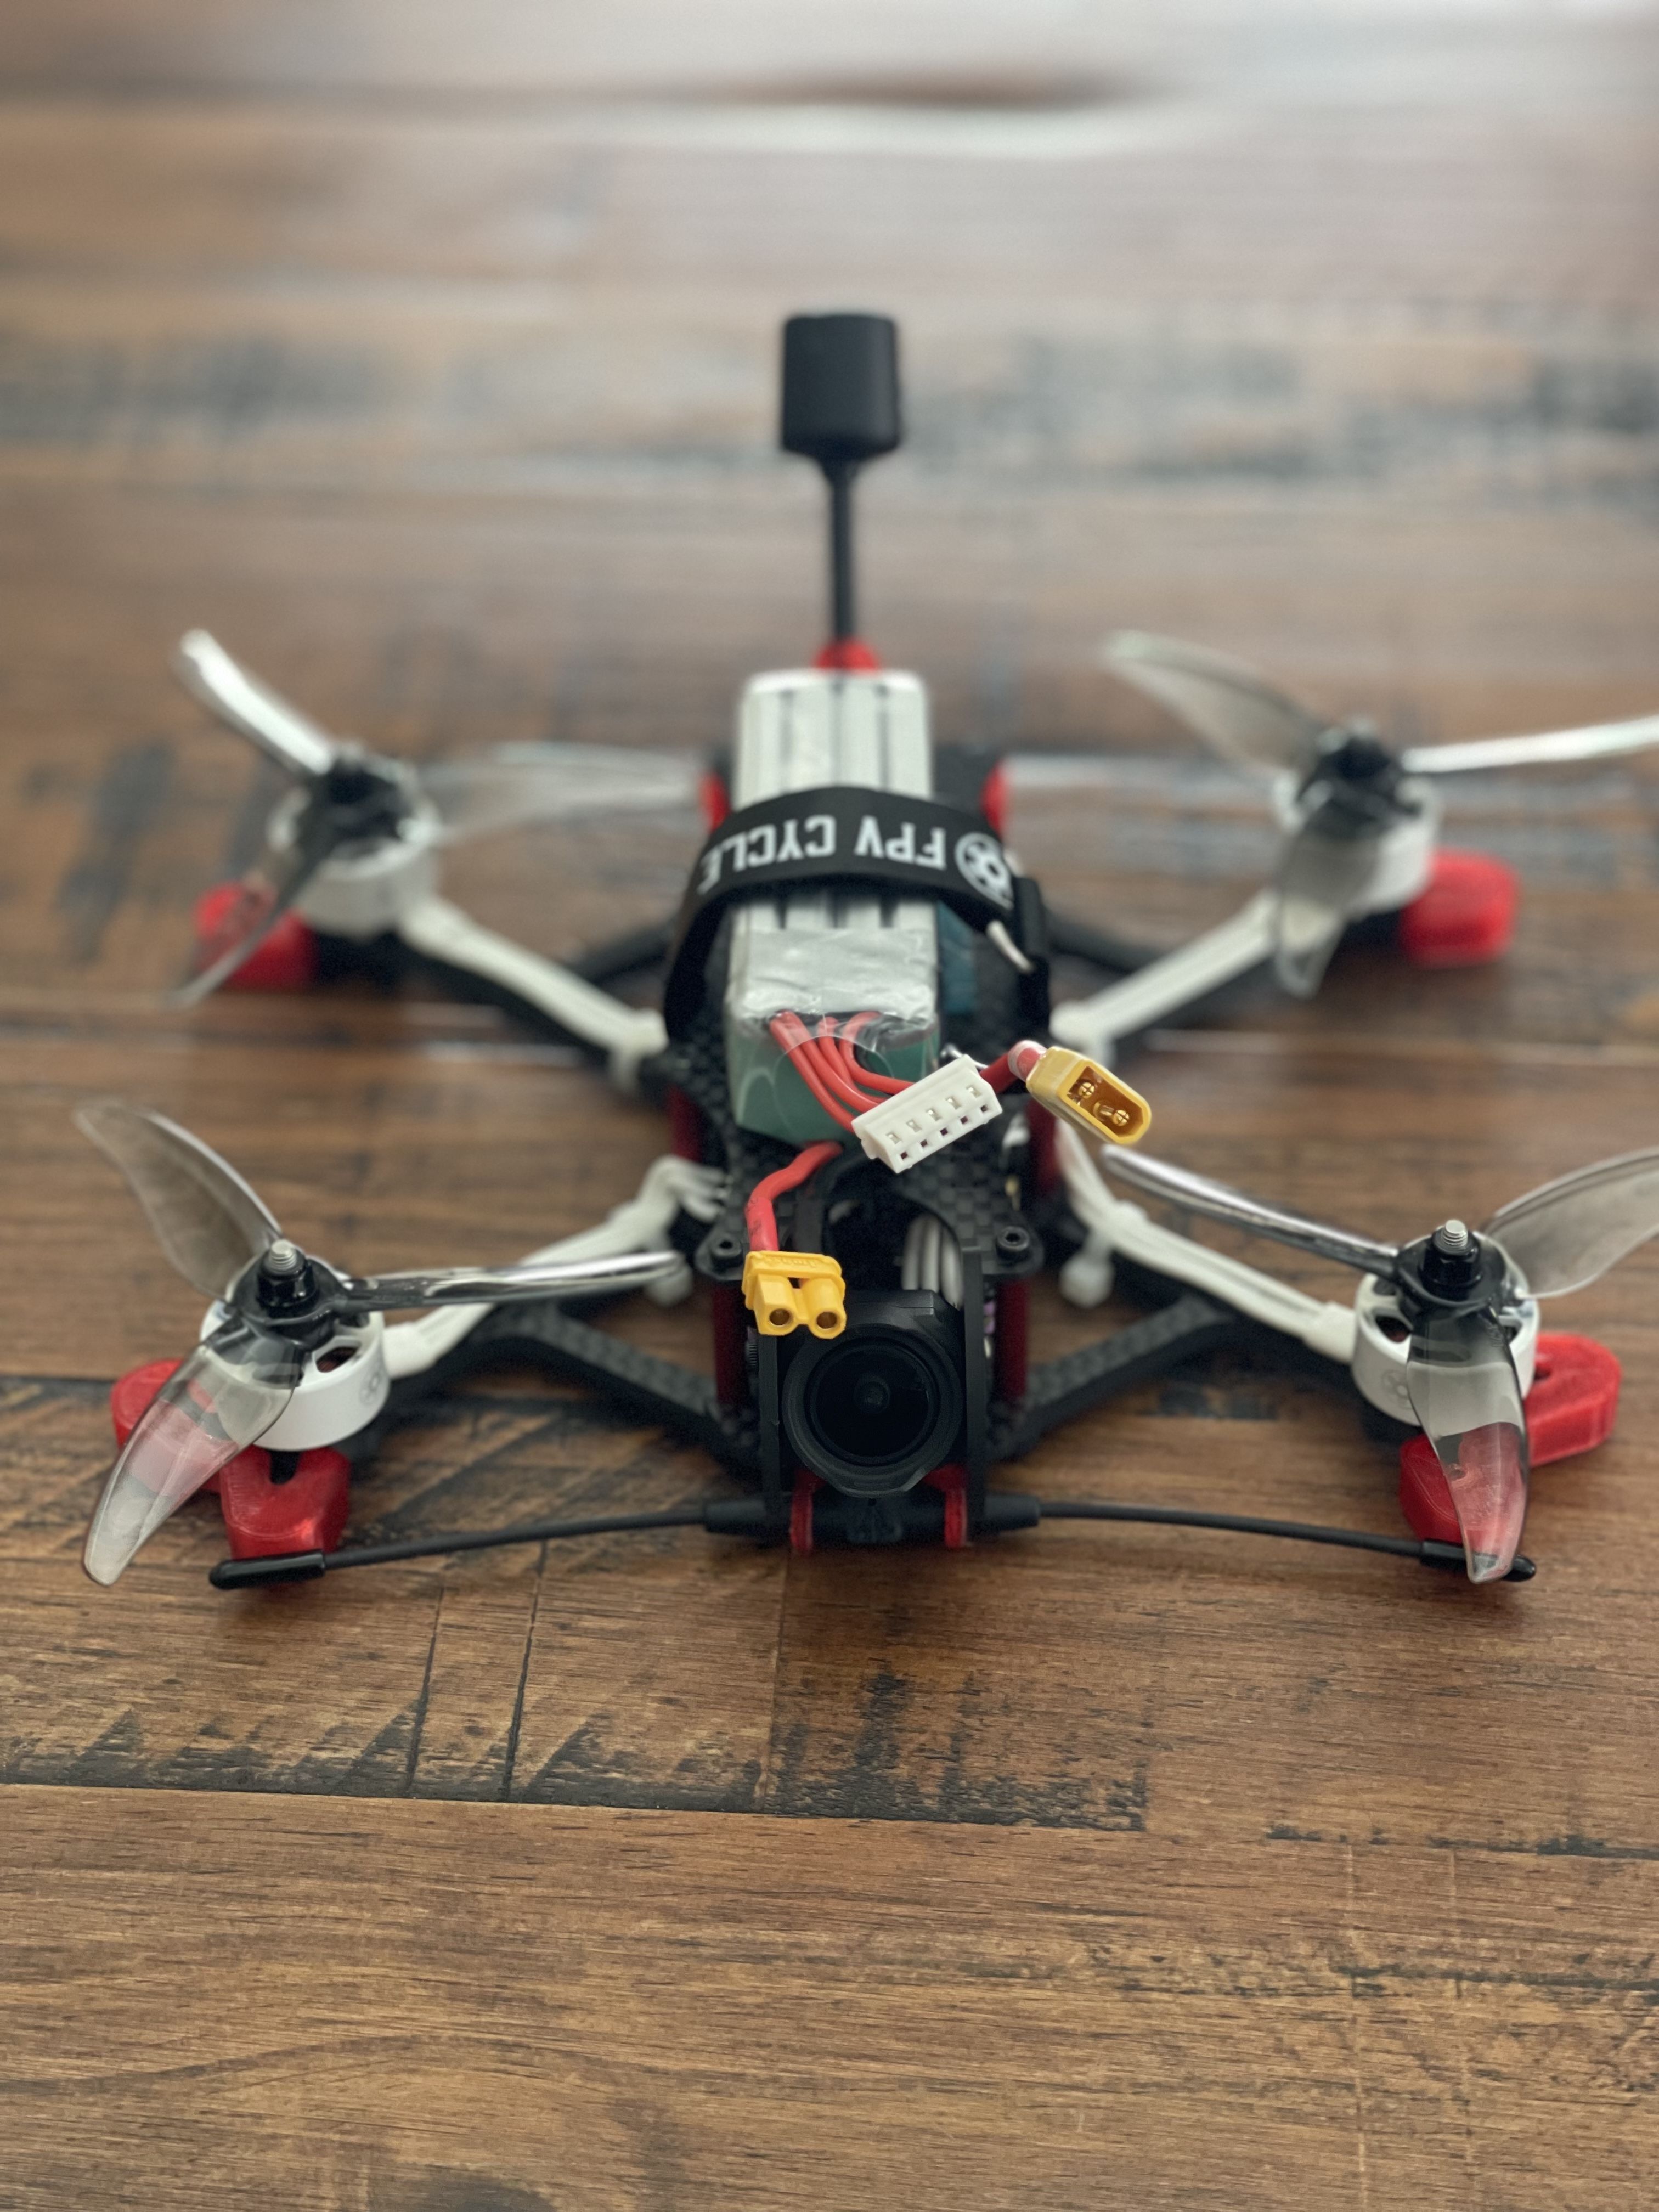 AOS 5 O3 - My first self-build - Racing Quads, Self-builds & FPV - Grey  Arrows Drone Club UK